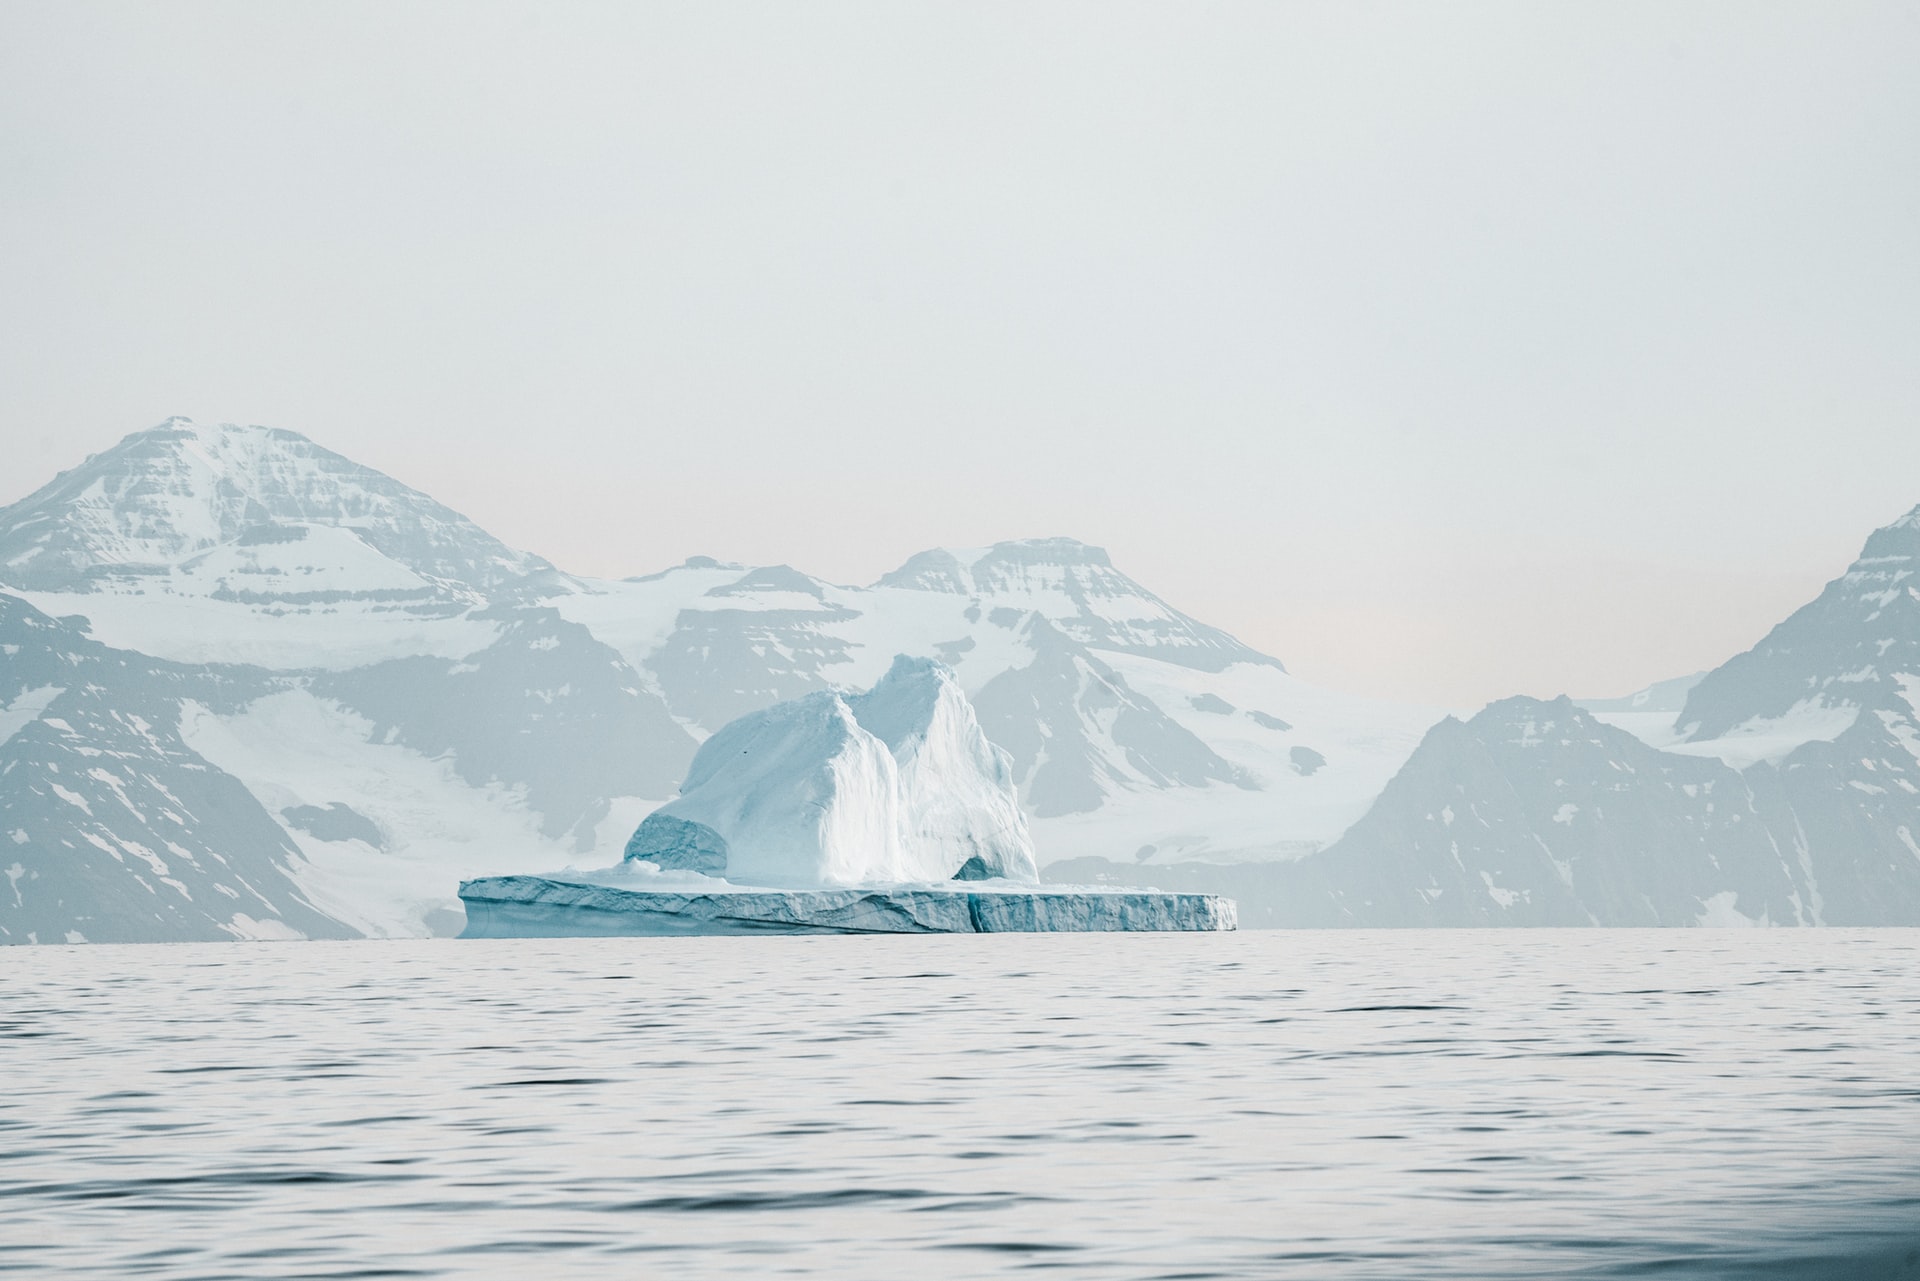 SCP Tower Defense Iceberg